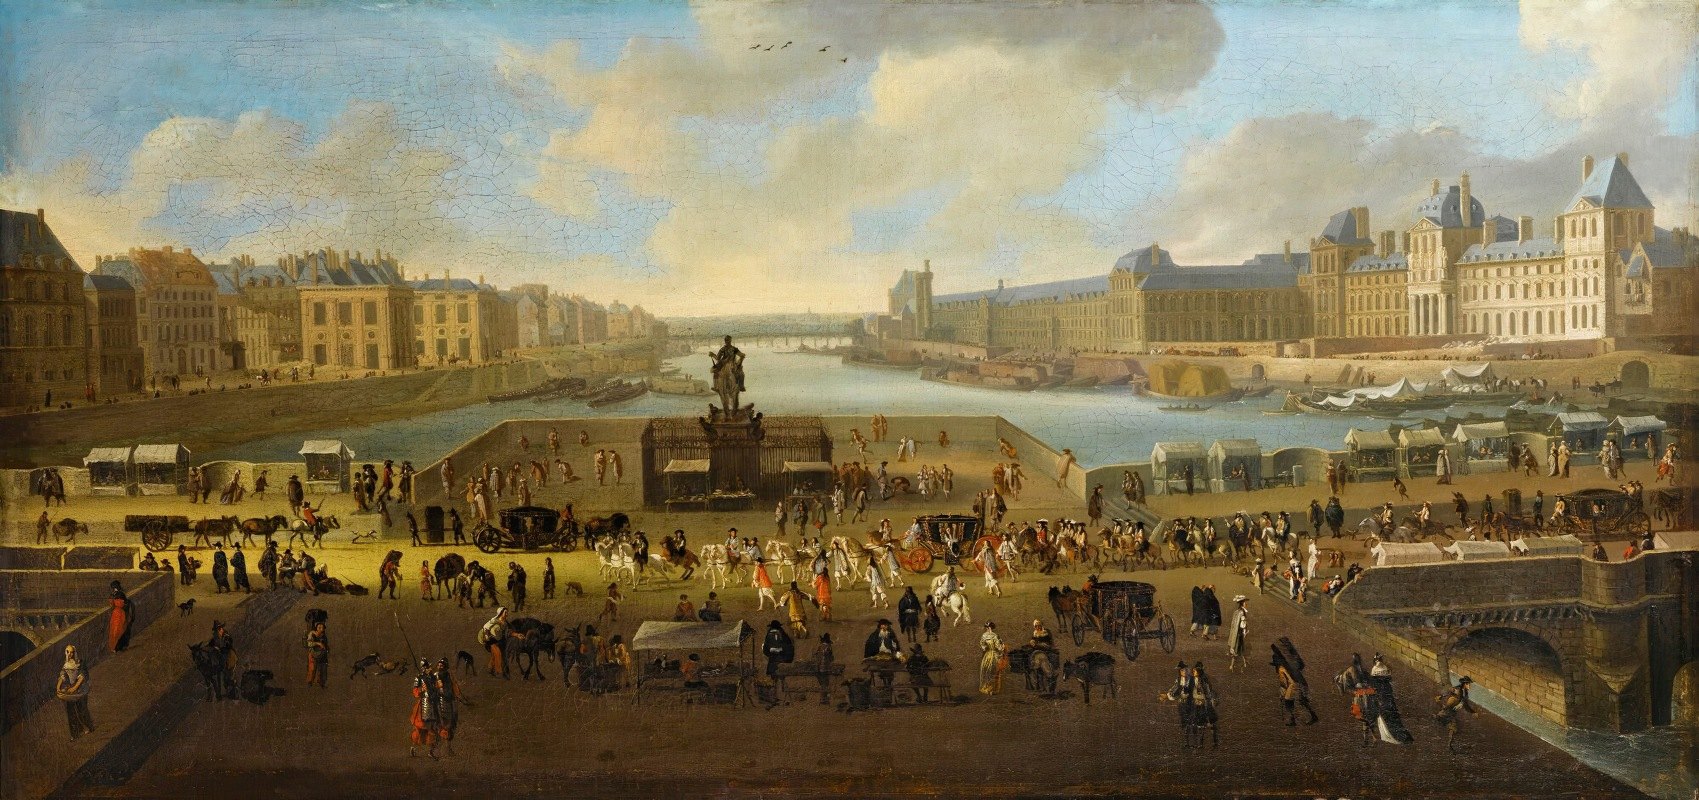 巴黎诺伊夫桥皇家巡游景观`Paris; A View Of The Pont Neuf With Royal Parade by Jean Baptiste Martin